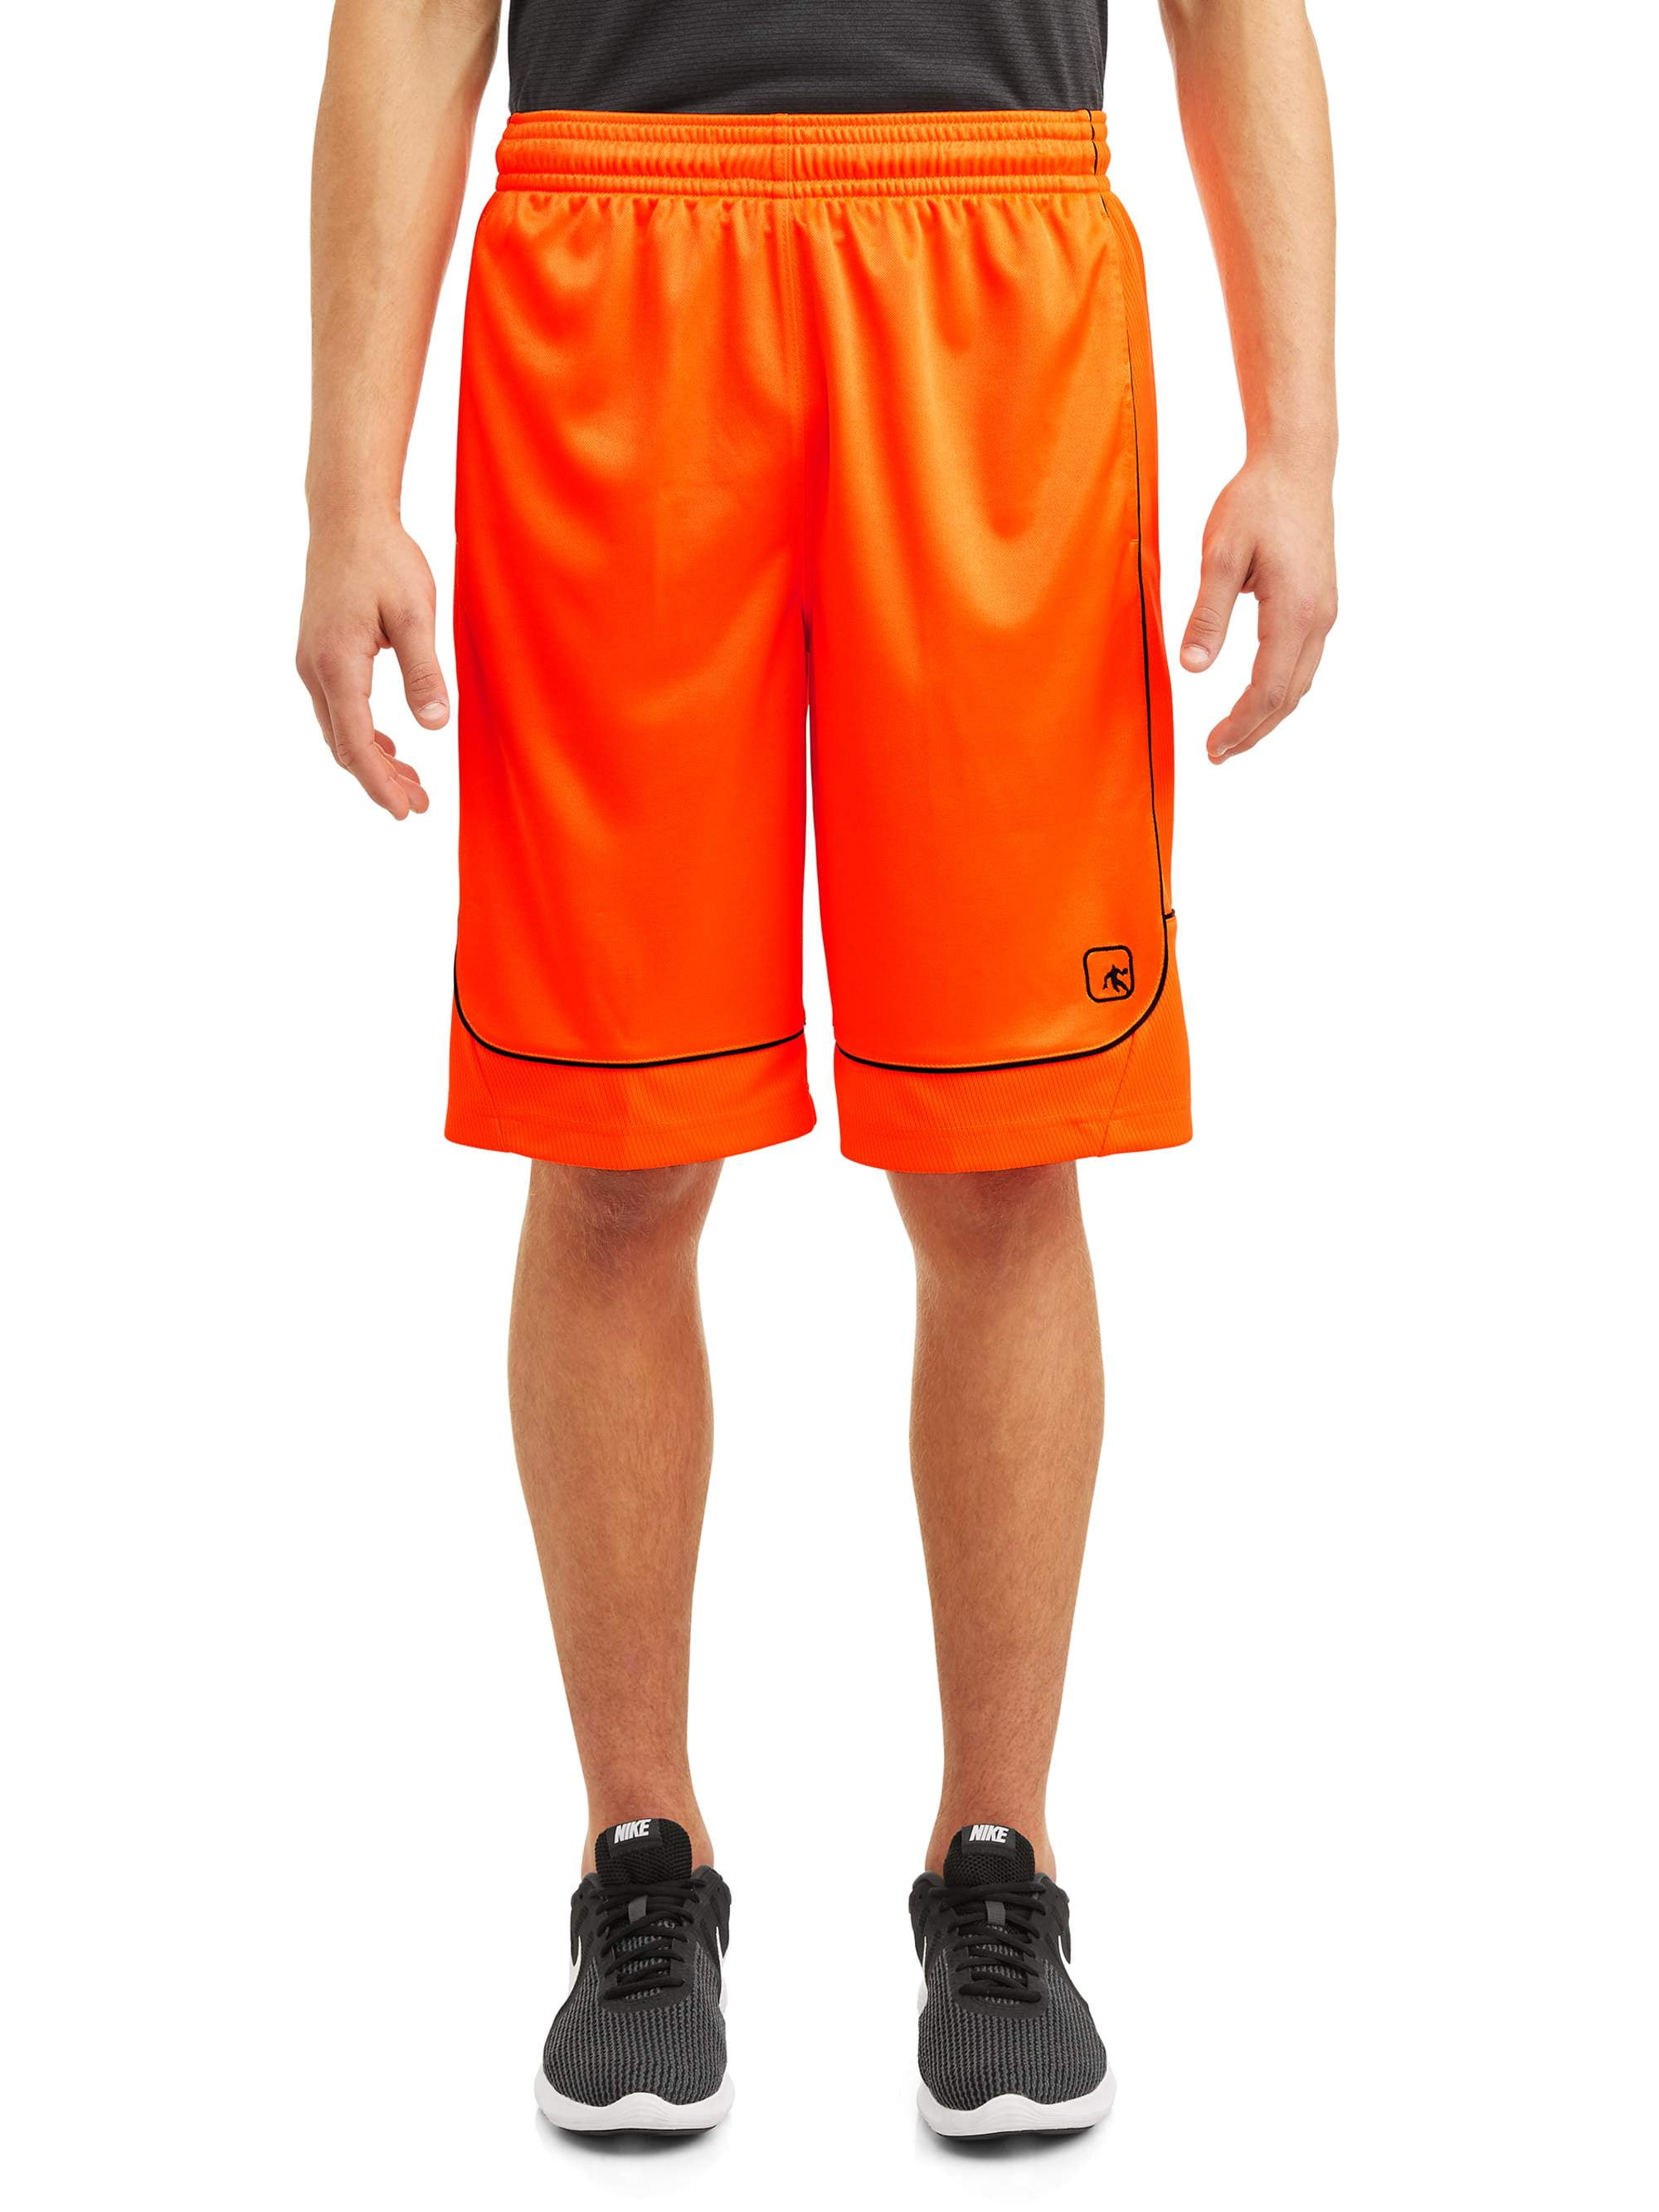 Hat and Beyond IH Mens MESH Shorts Jersey Sports Basketball Gym S-5XL Workout 1IHA0001 X-Large, White